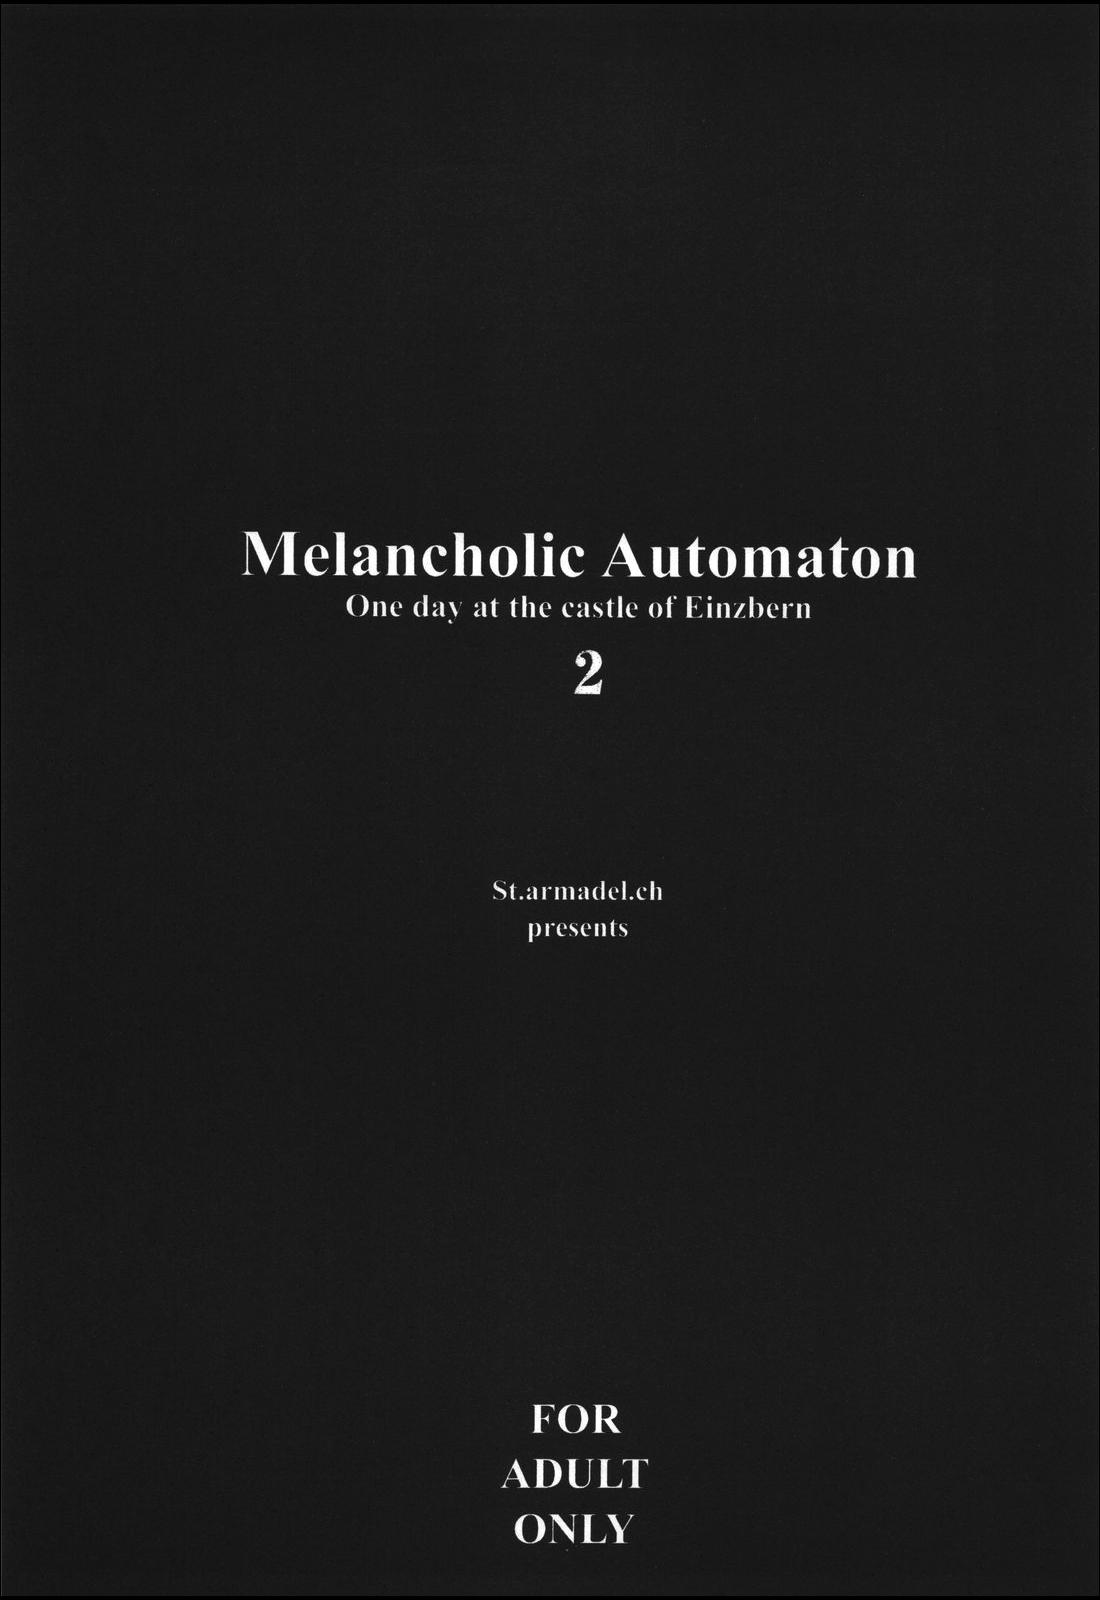 Melancholic Automaton 2 - One day at the castle of Einzbern 2